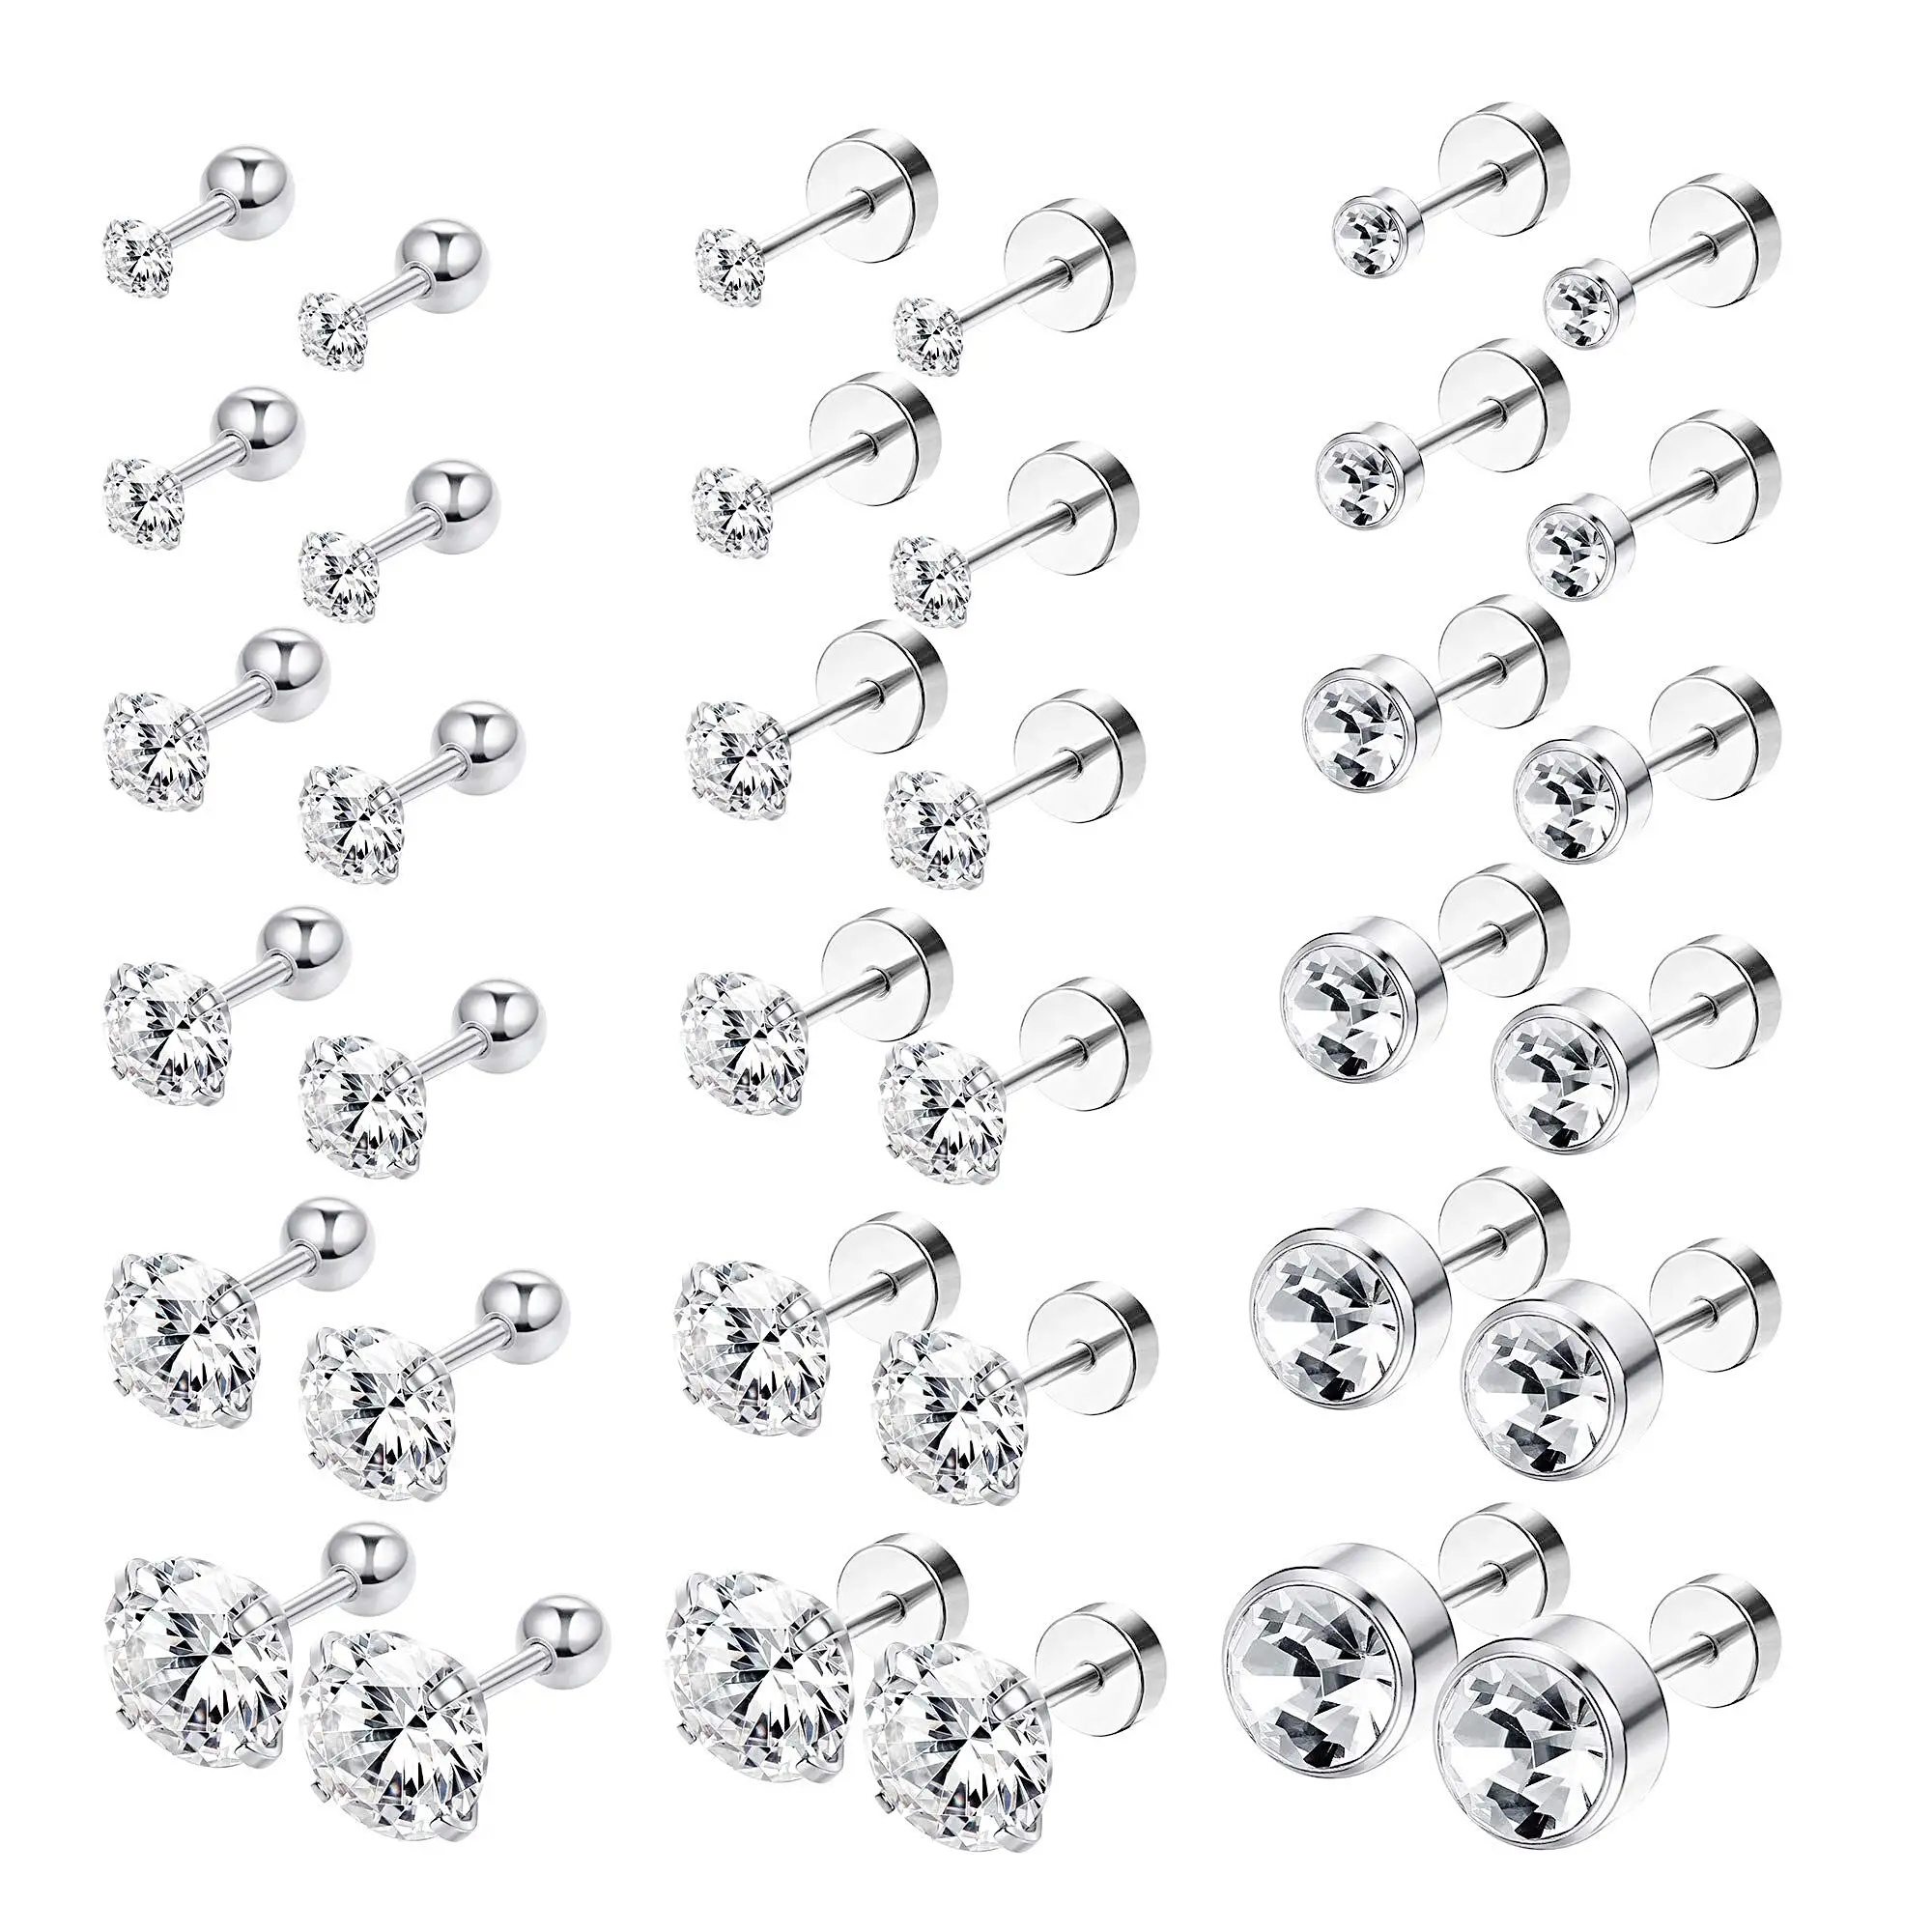 

16G 1 Pair Stainless Steel Screwback Cartilage Stud Earrings for Men Women Flatback Tragus Helix Ear Stud Piercing Earrings Set